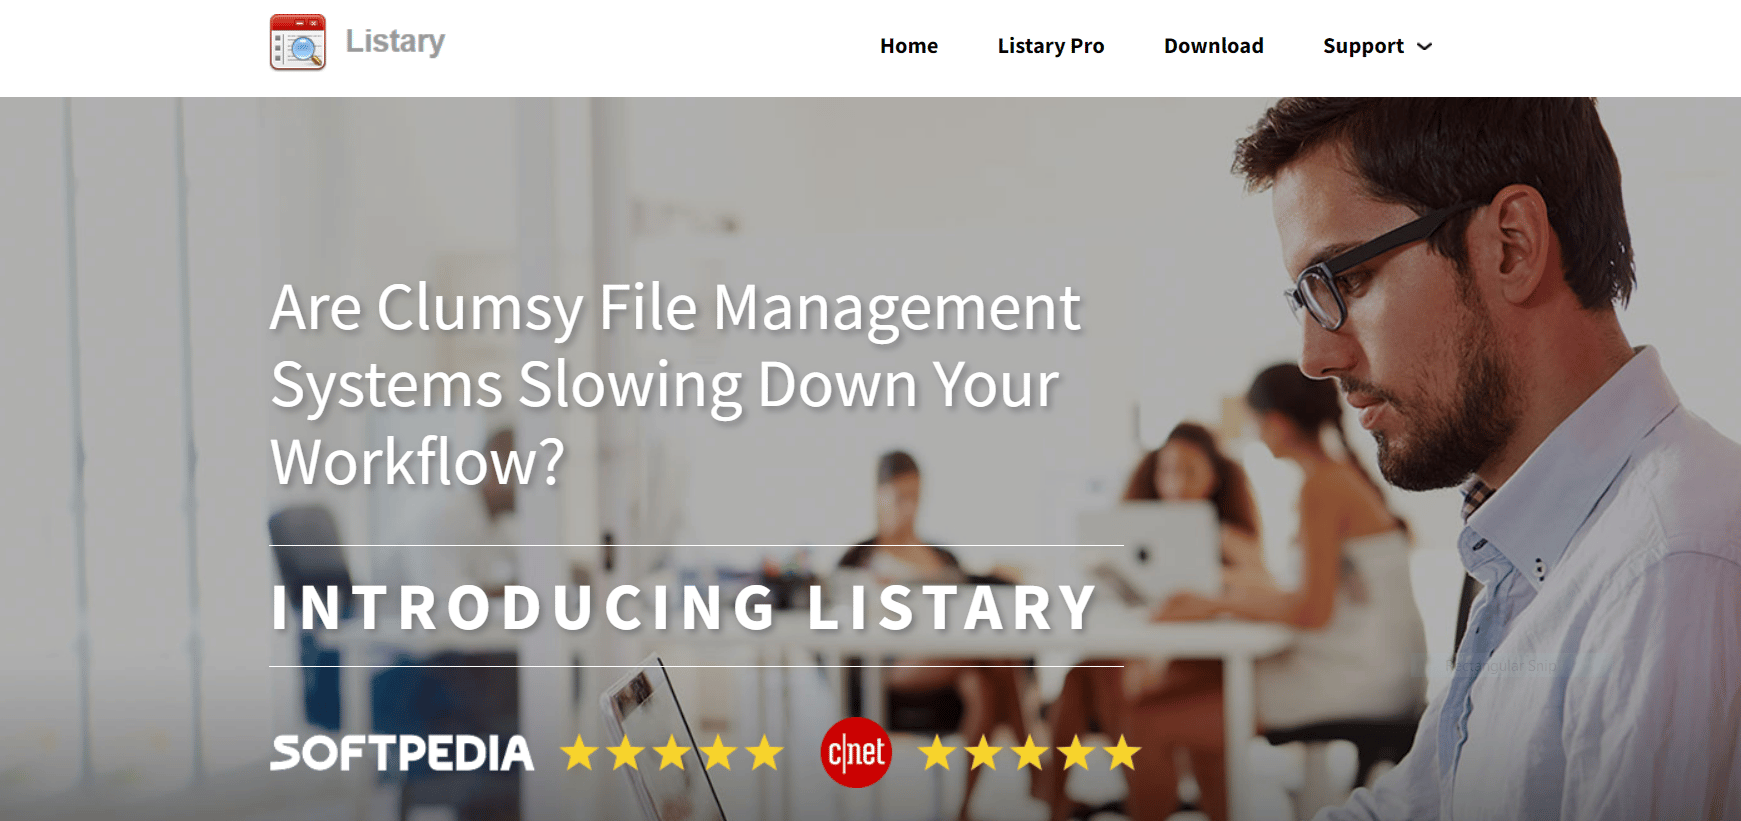 Listary. Best Desktop Search Engine For Windows 10